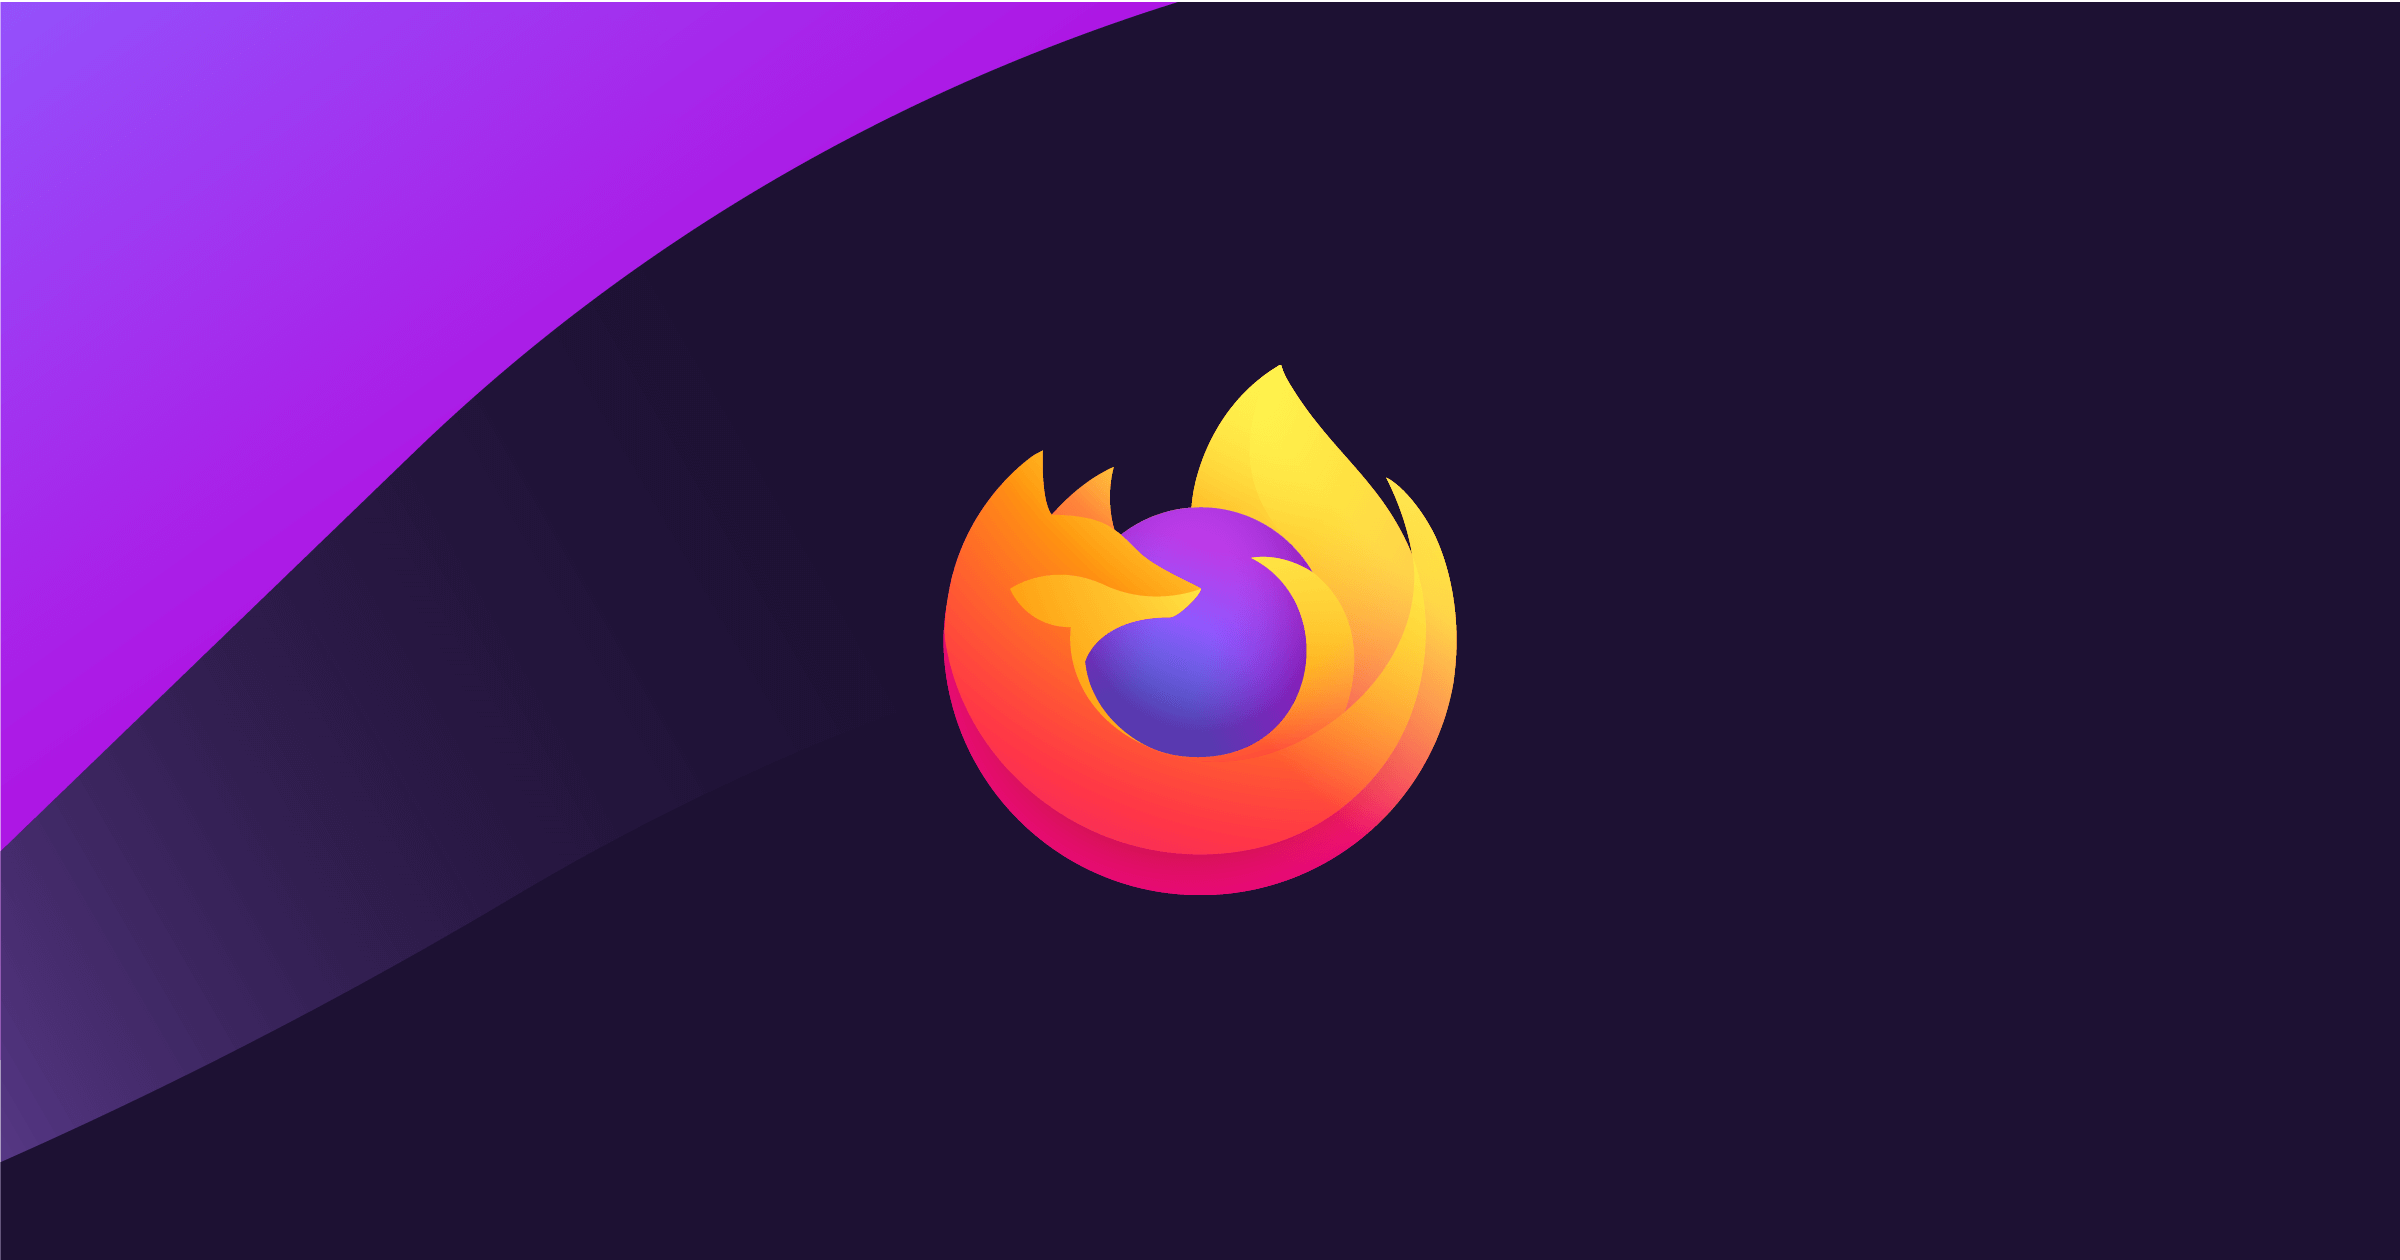 Happy Birthday: Firefox has turned 15